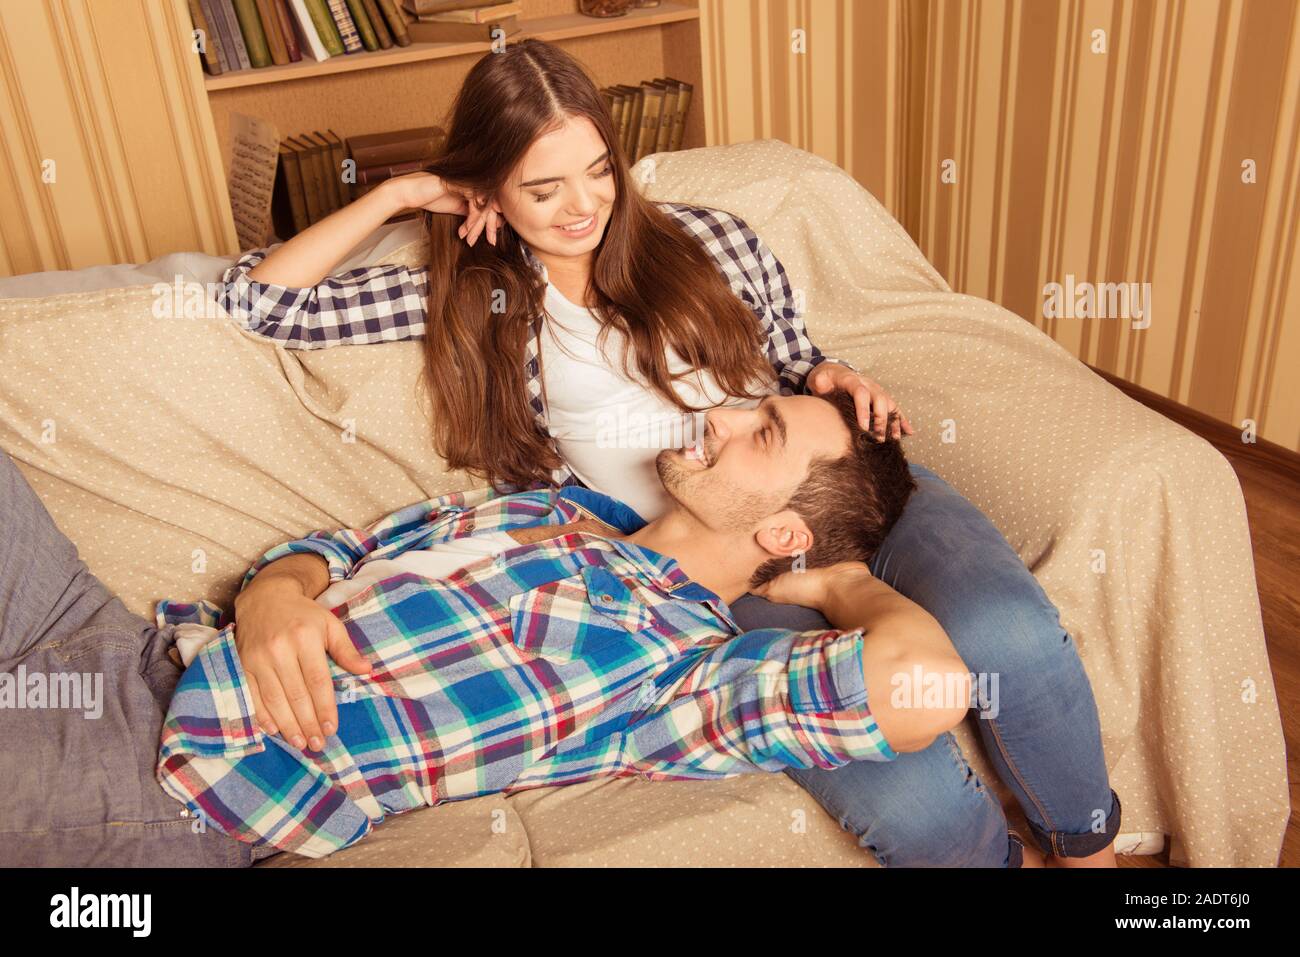 Handsome boy lying on girlfriend's legs on the sofa Stock Photo